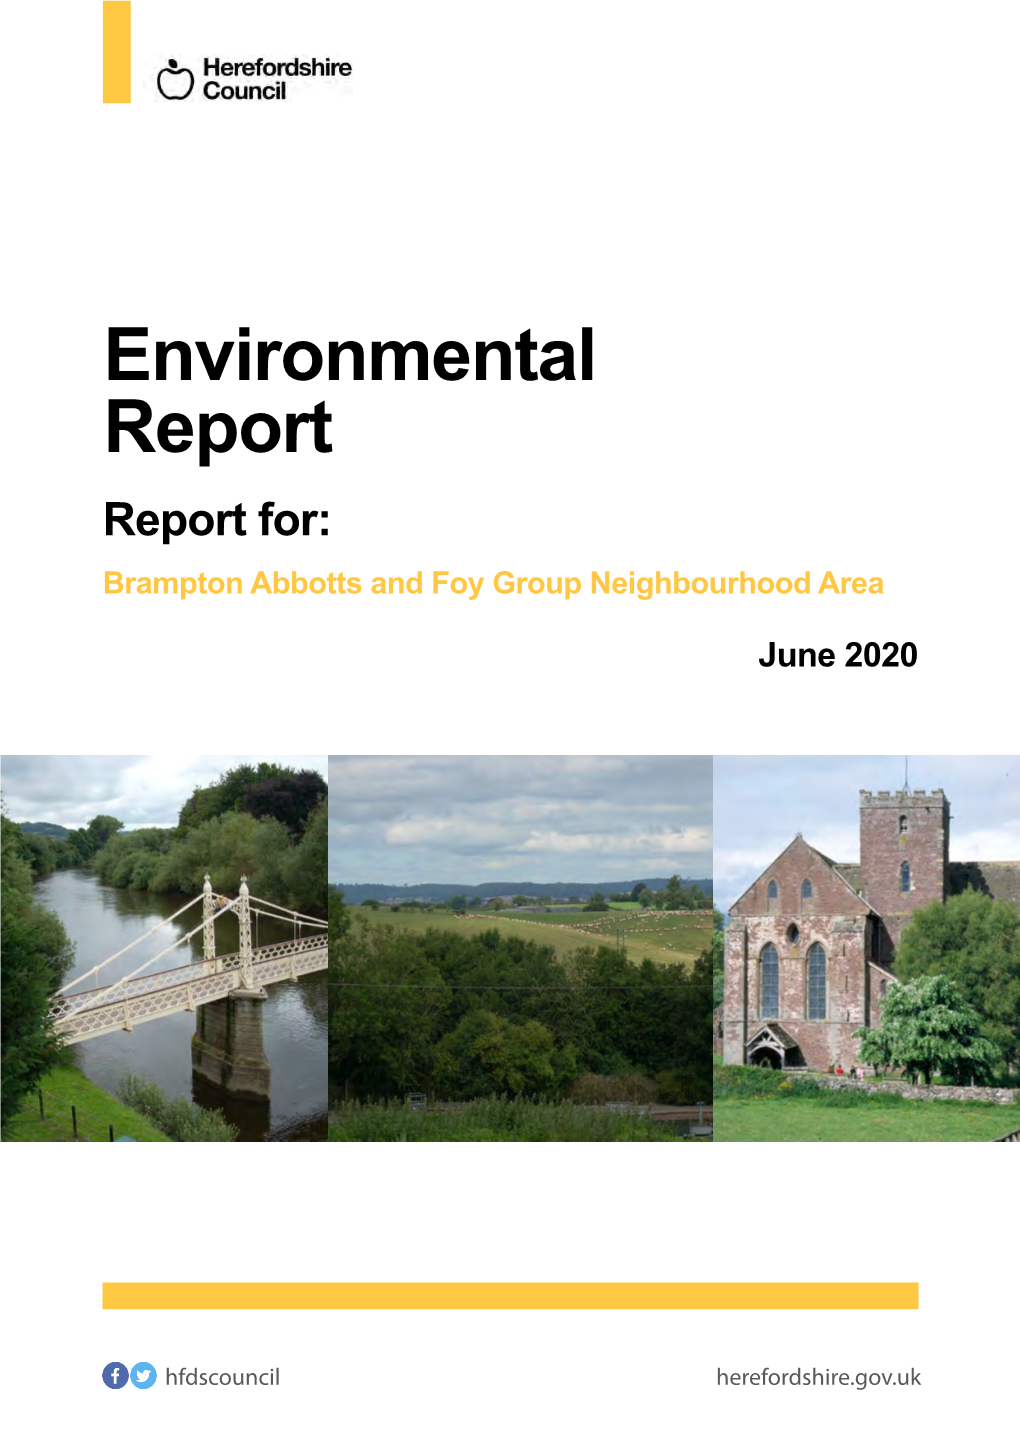 Brampton Abbotts and Foy Environmental Report June 2020